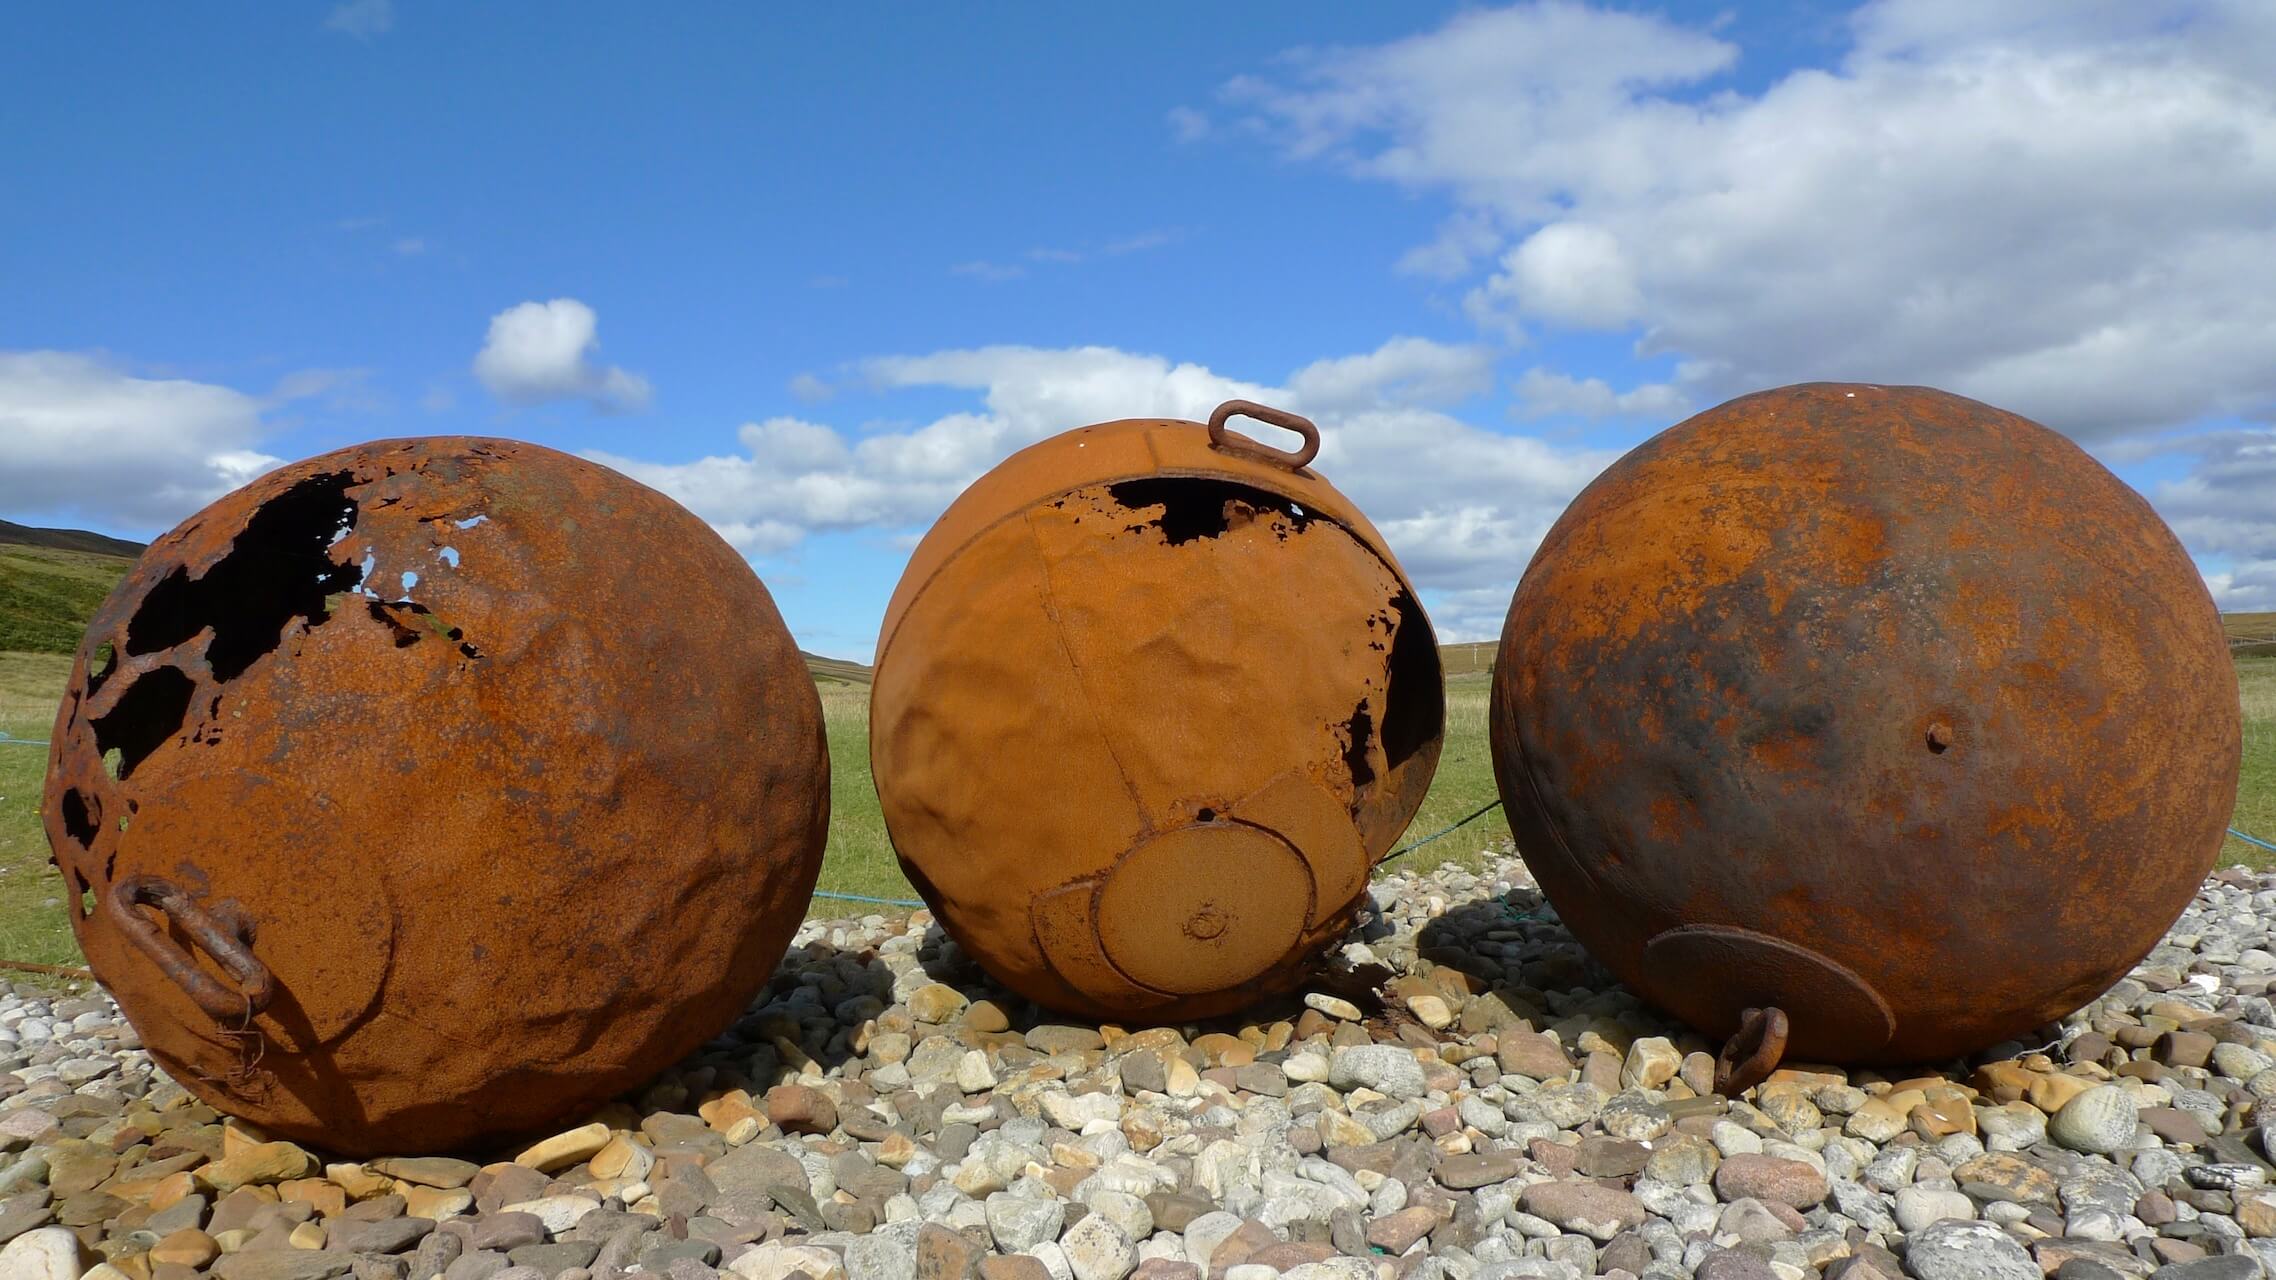 Large rusty balls